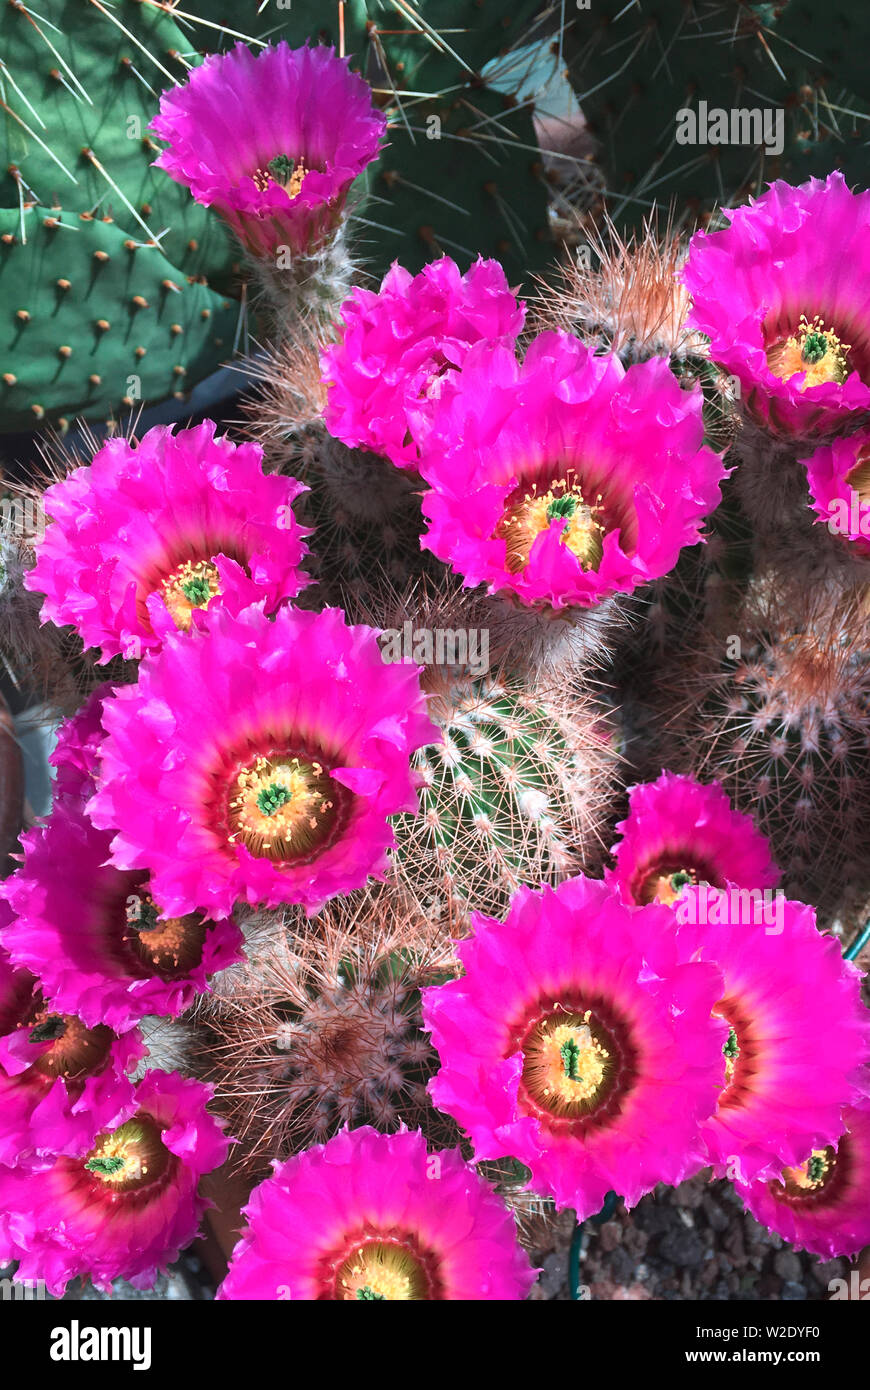 Flowering cactus Echinocereus reichenbachii from Texas - USA. Stock Photo